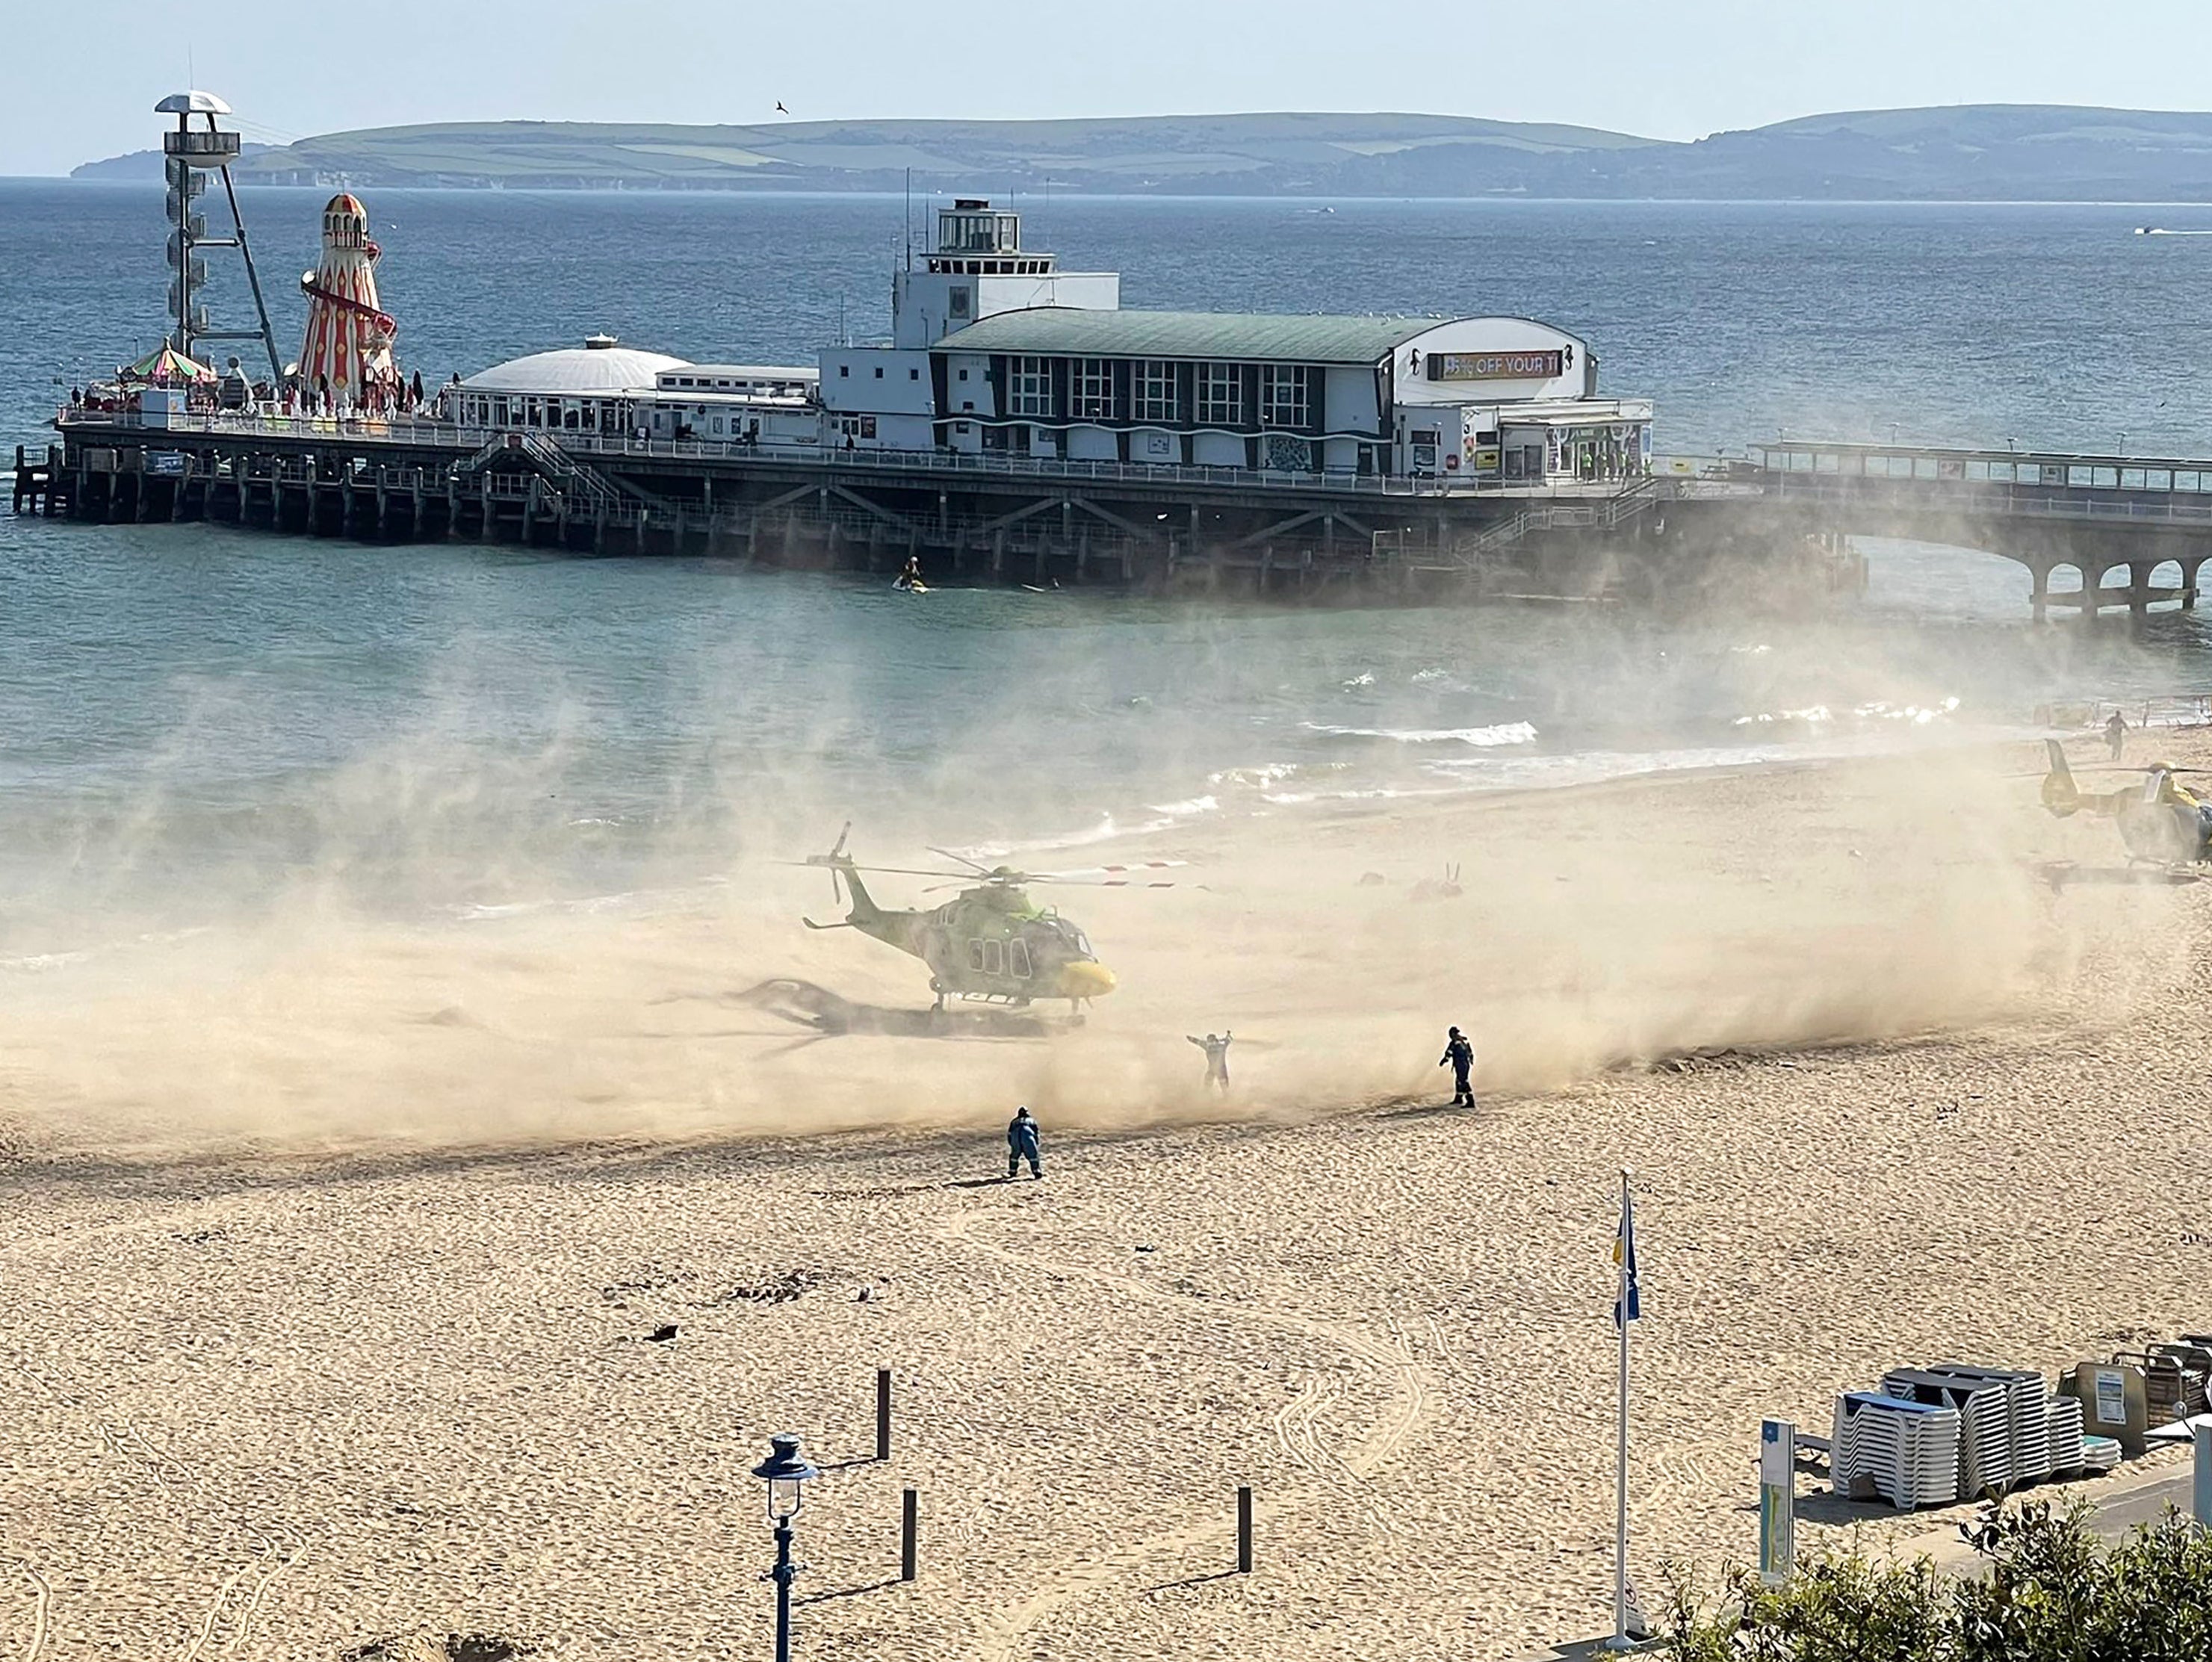 Air ambulances landed on the beach